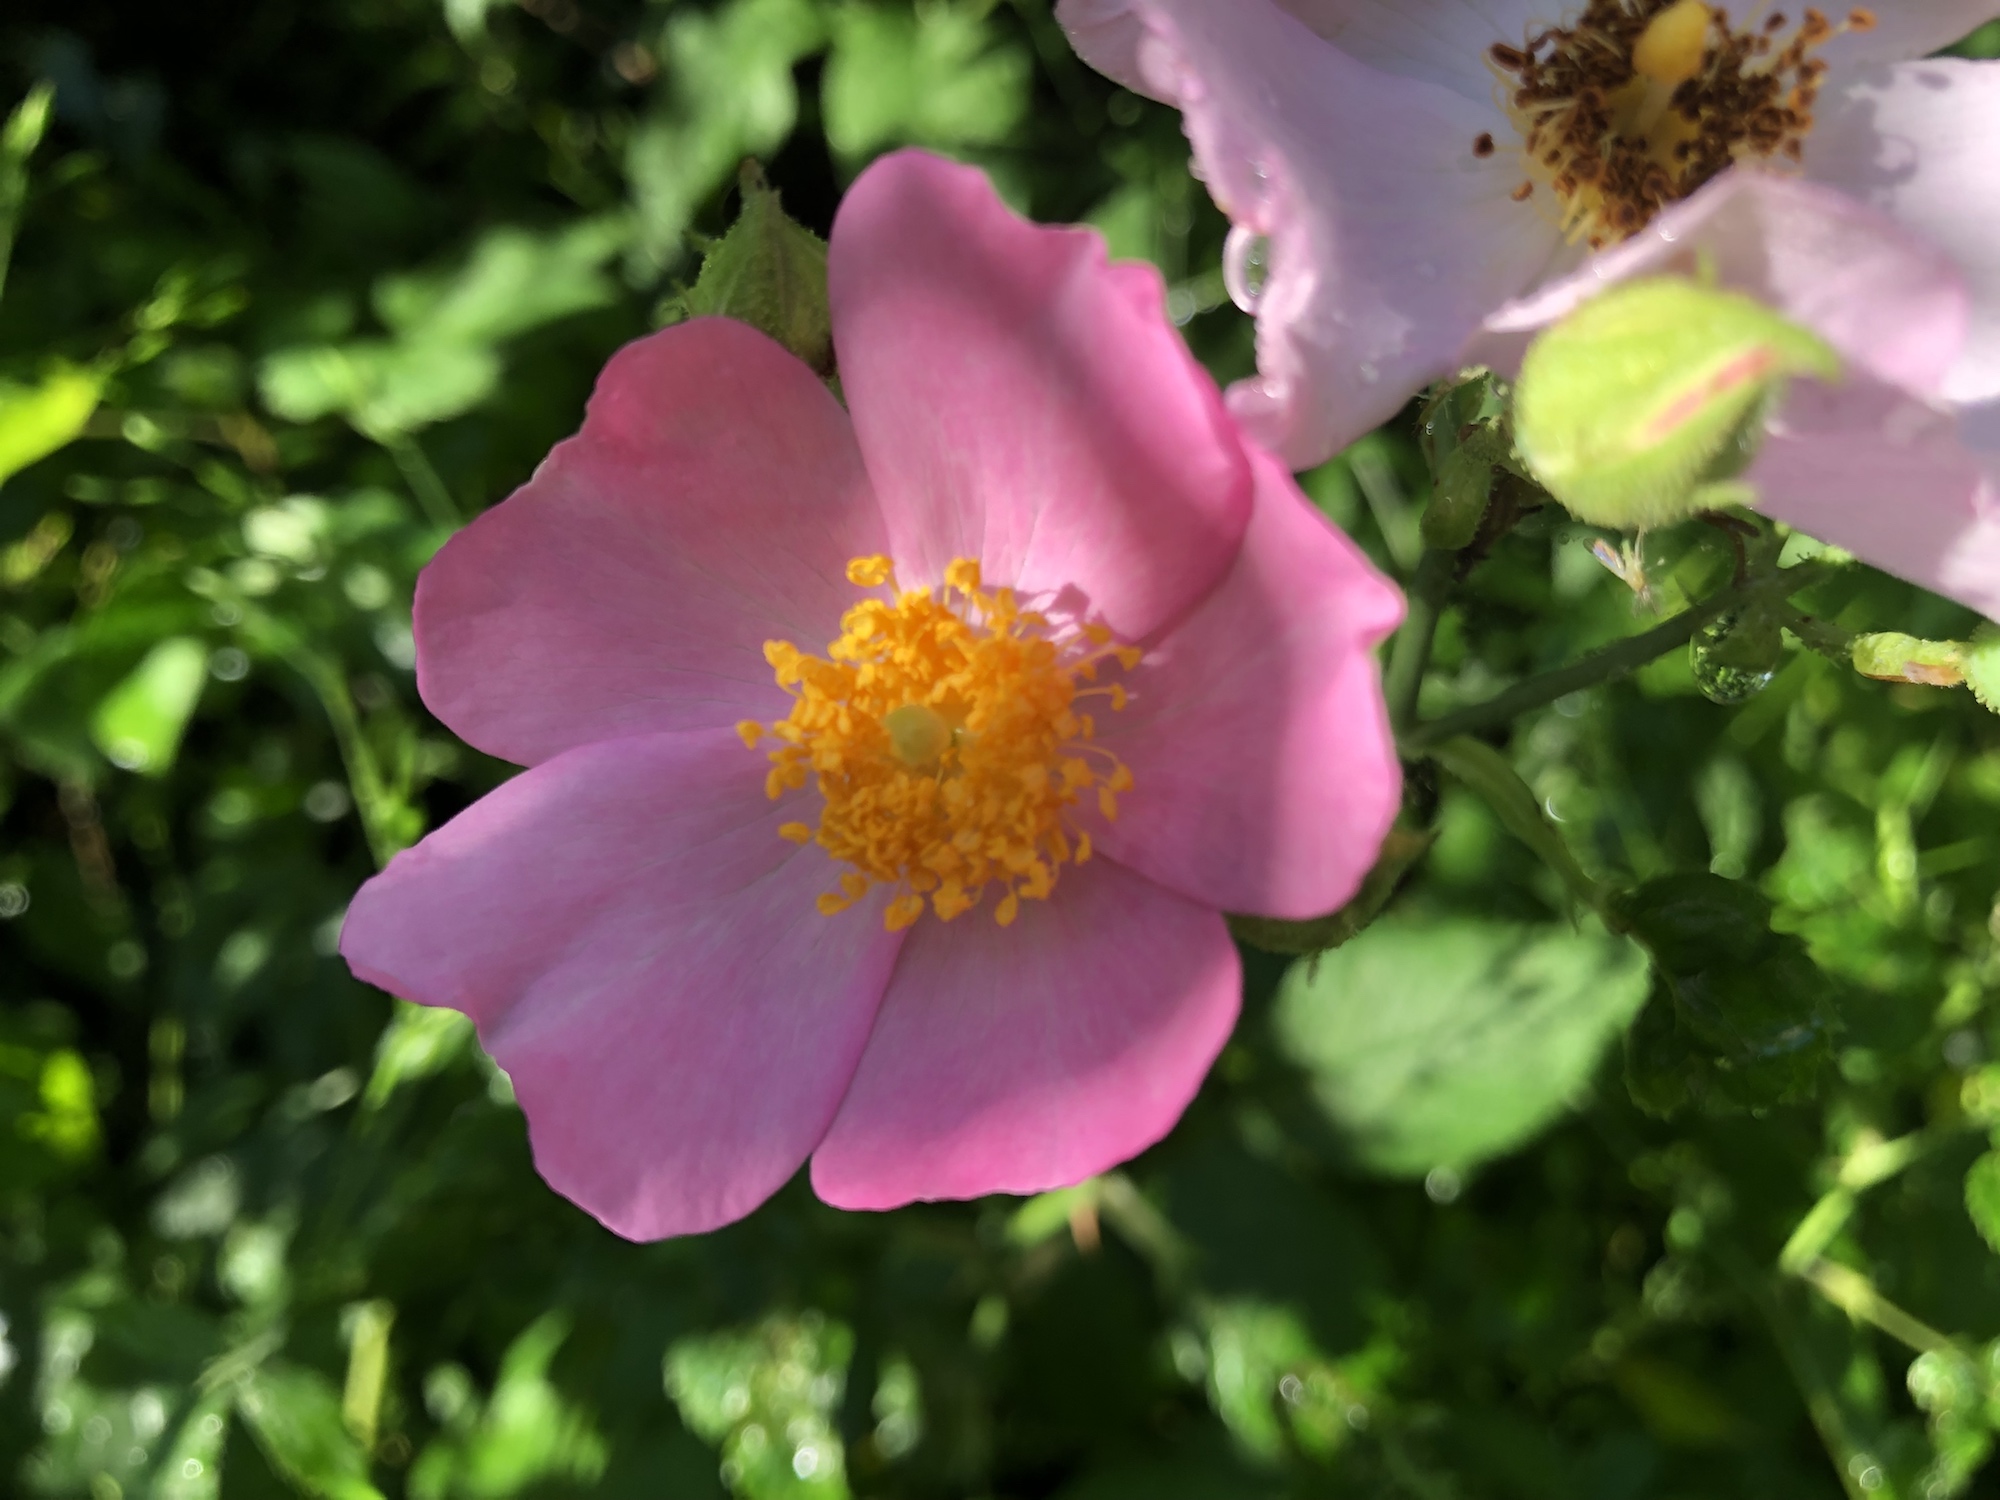 Prairie Rose near Council Ring in the Oak Savanna on July 10, 2019.